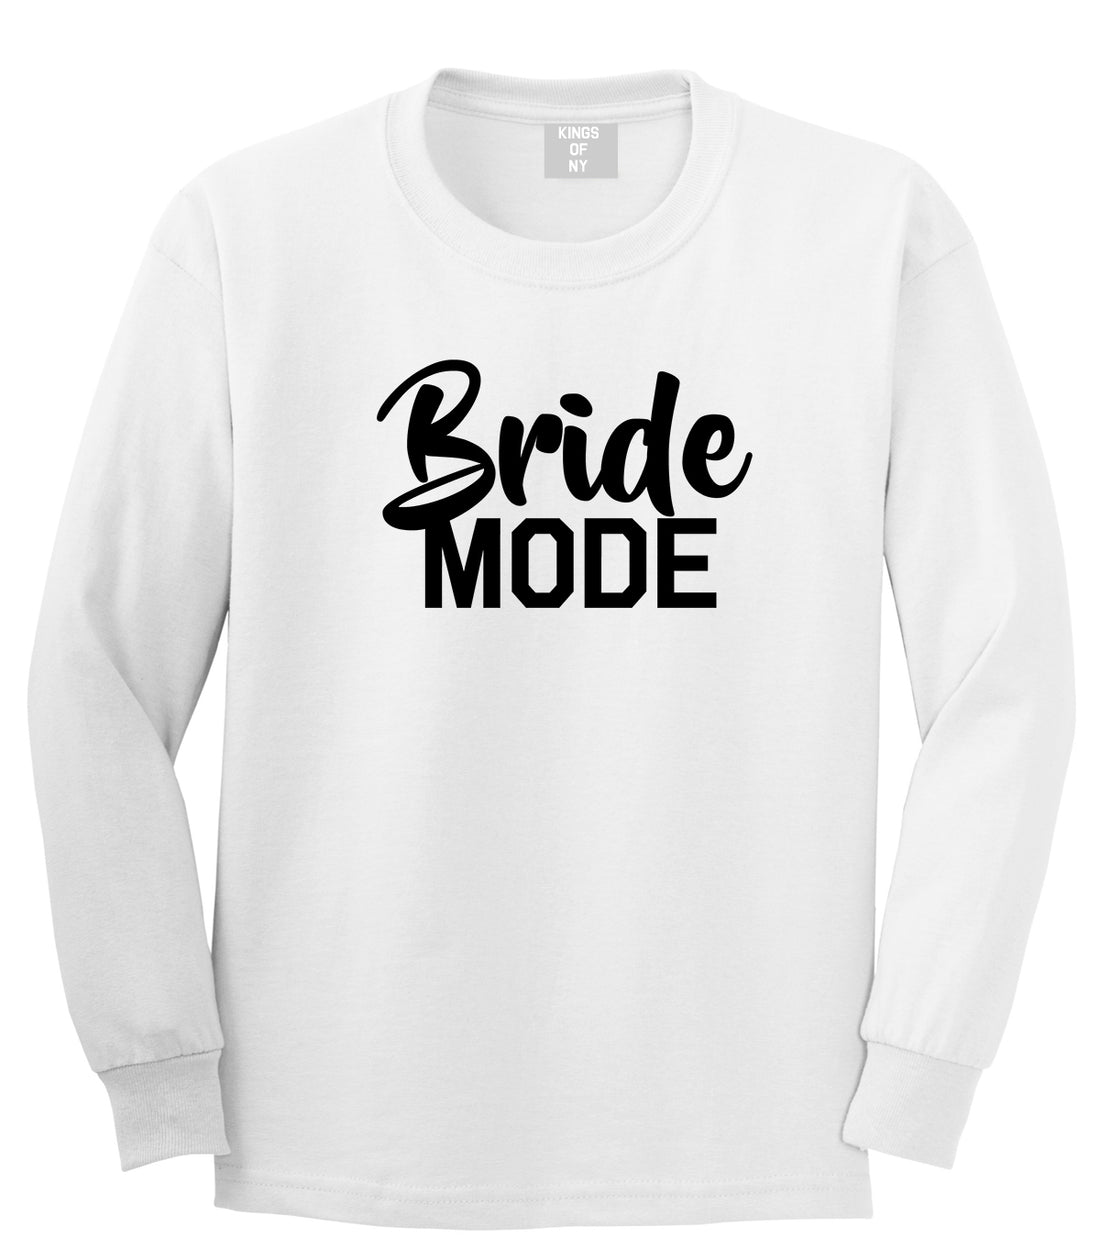 Bride Mode Bridal Mens White Long Sleeve T-Shirt by KINGS OF NY